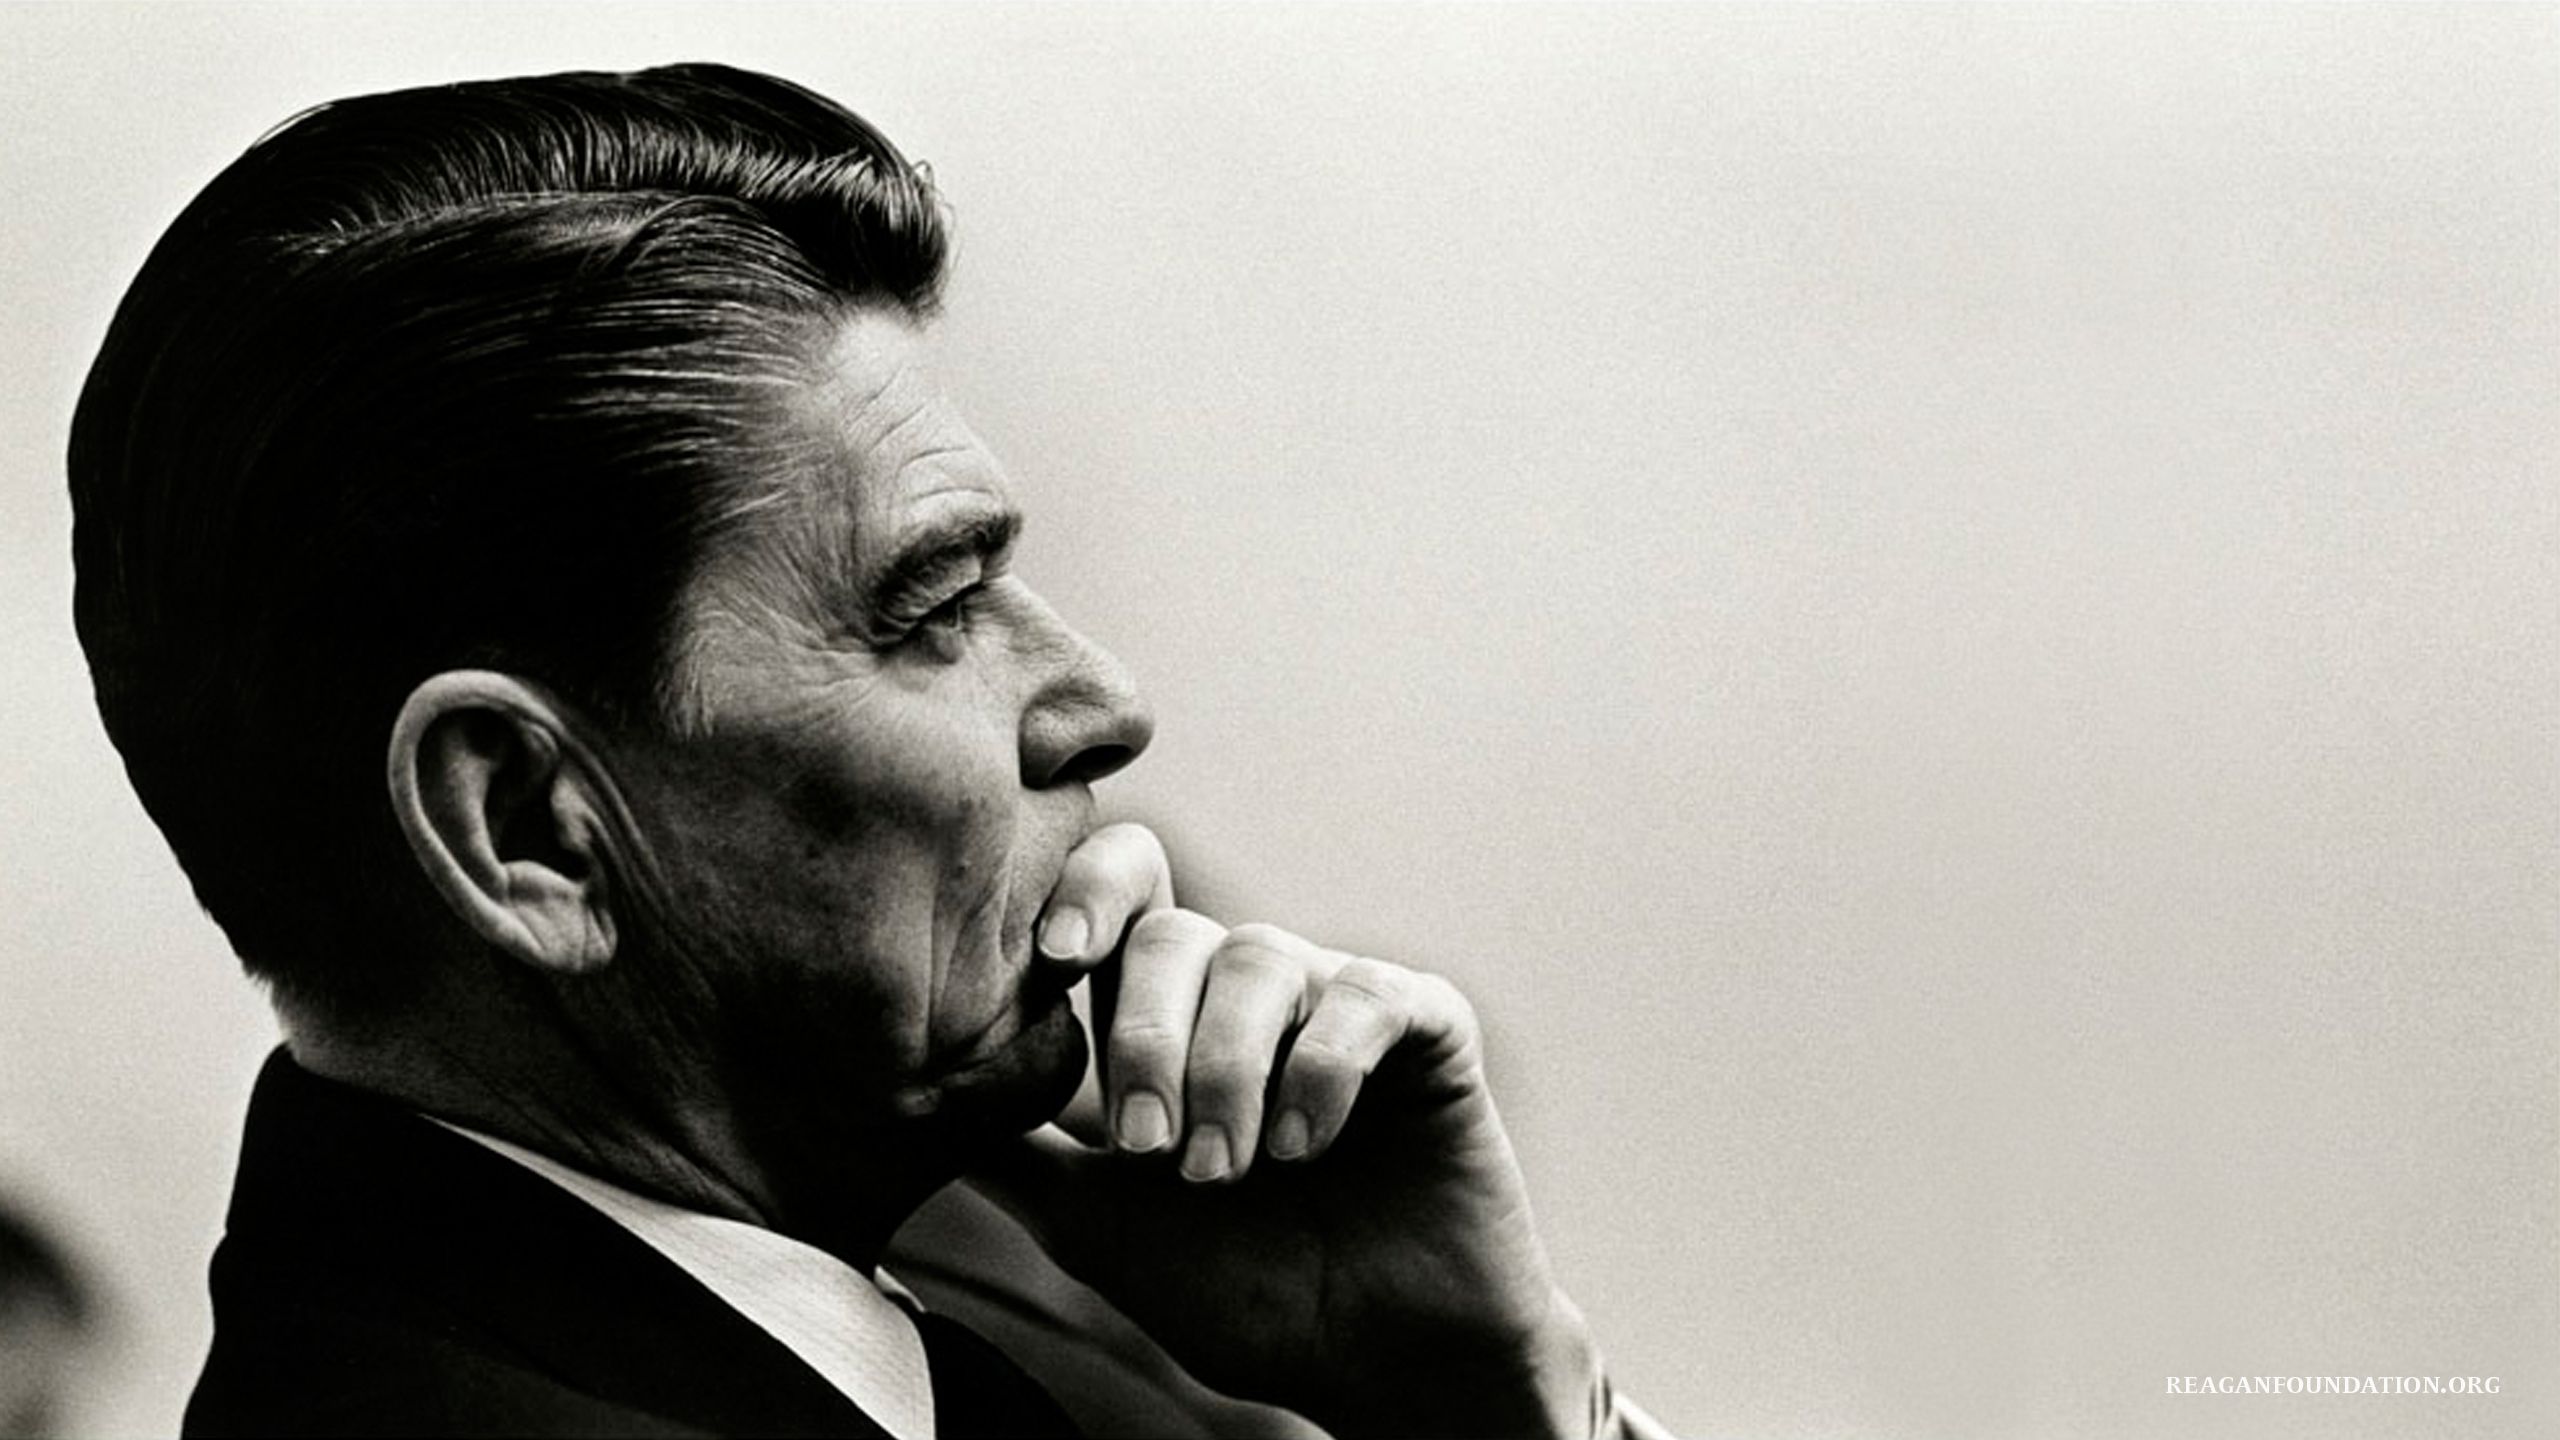 Reagan Wallpaper Archive - Ronald Reagan Presidential Foundation